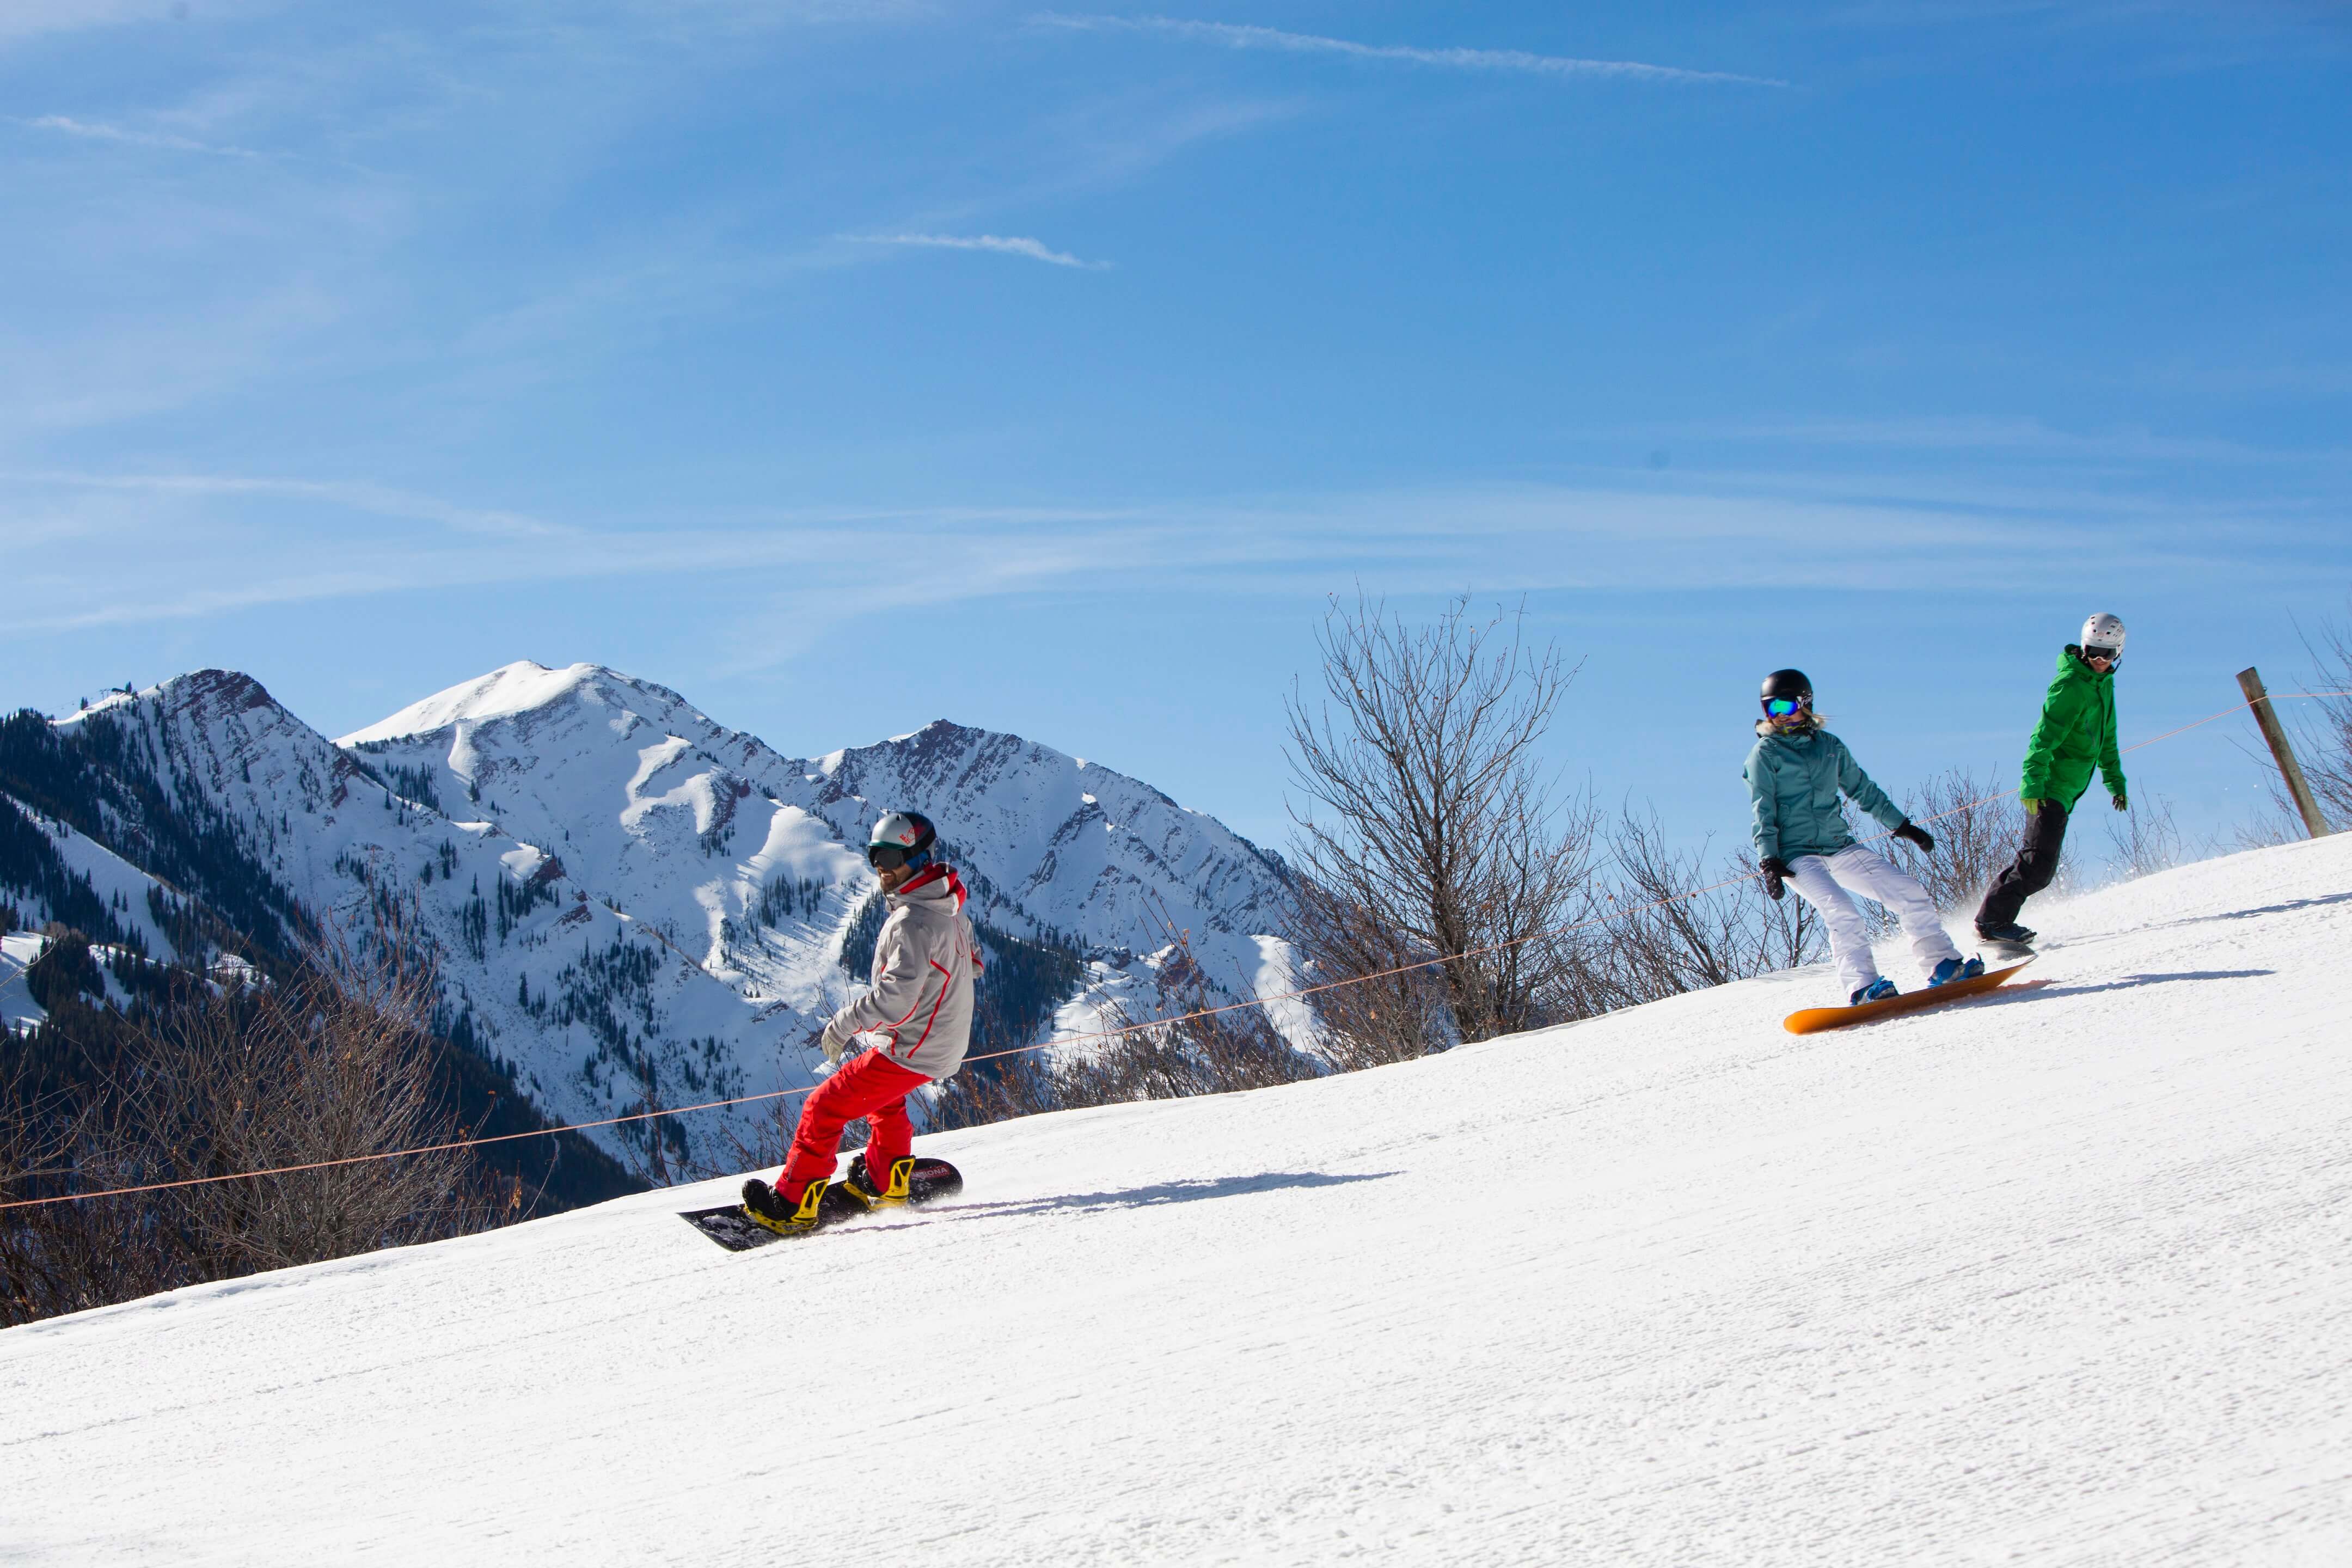 Colorado Ski Resorts Welcome Beginners for January's Learn to Ski ...